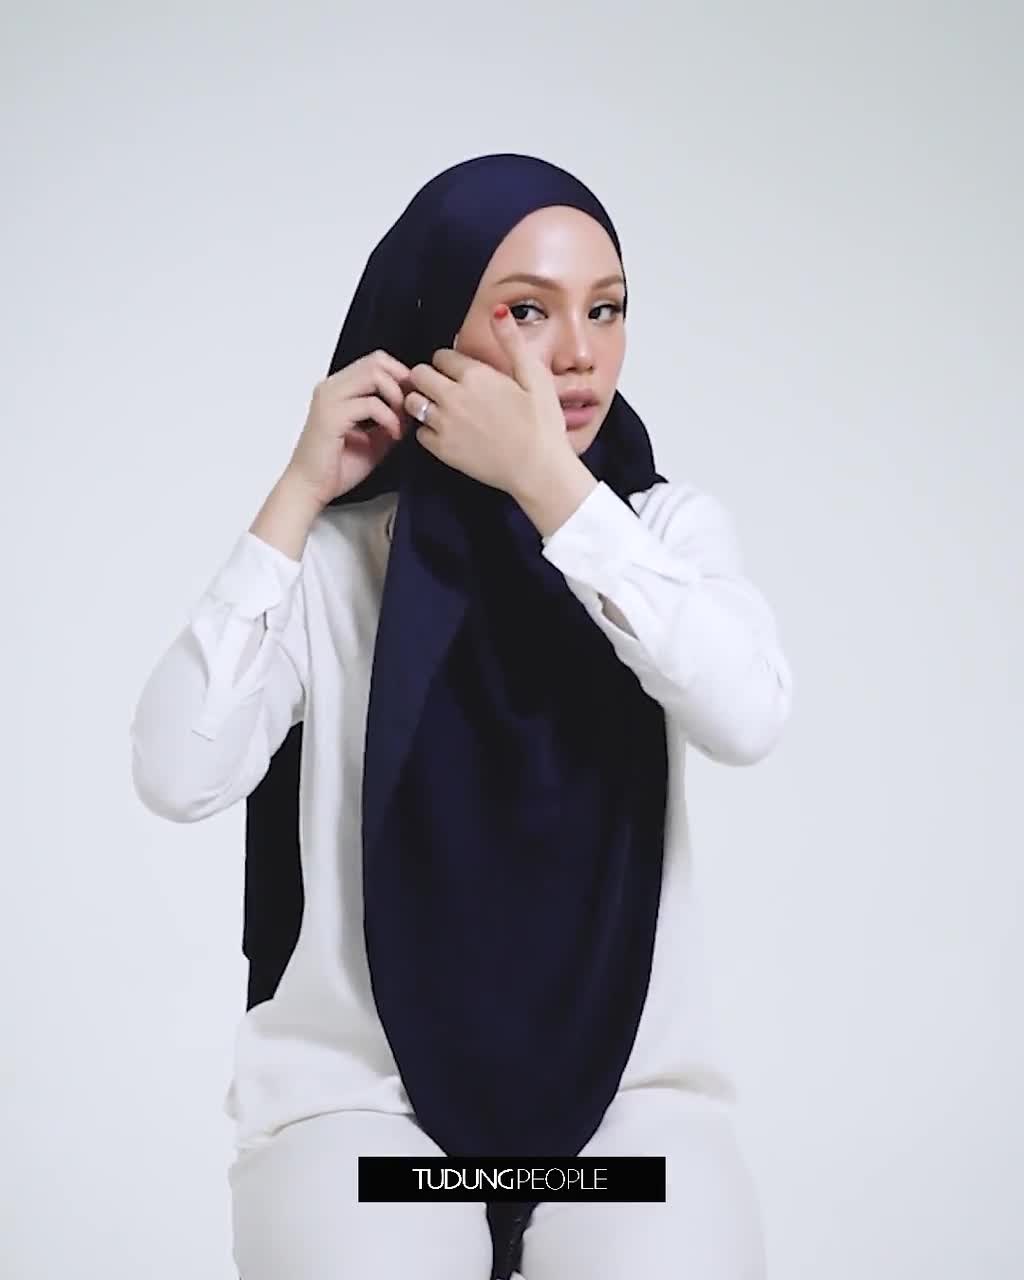 ILYA Malaysian Satin Silk Hijab Beautiful Shades Available picture